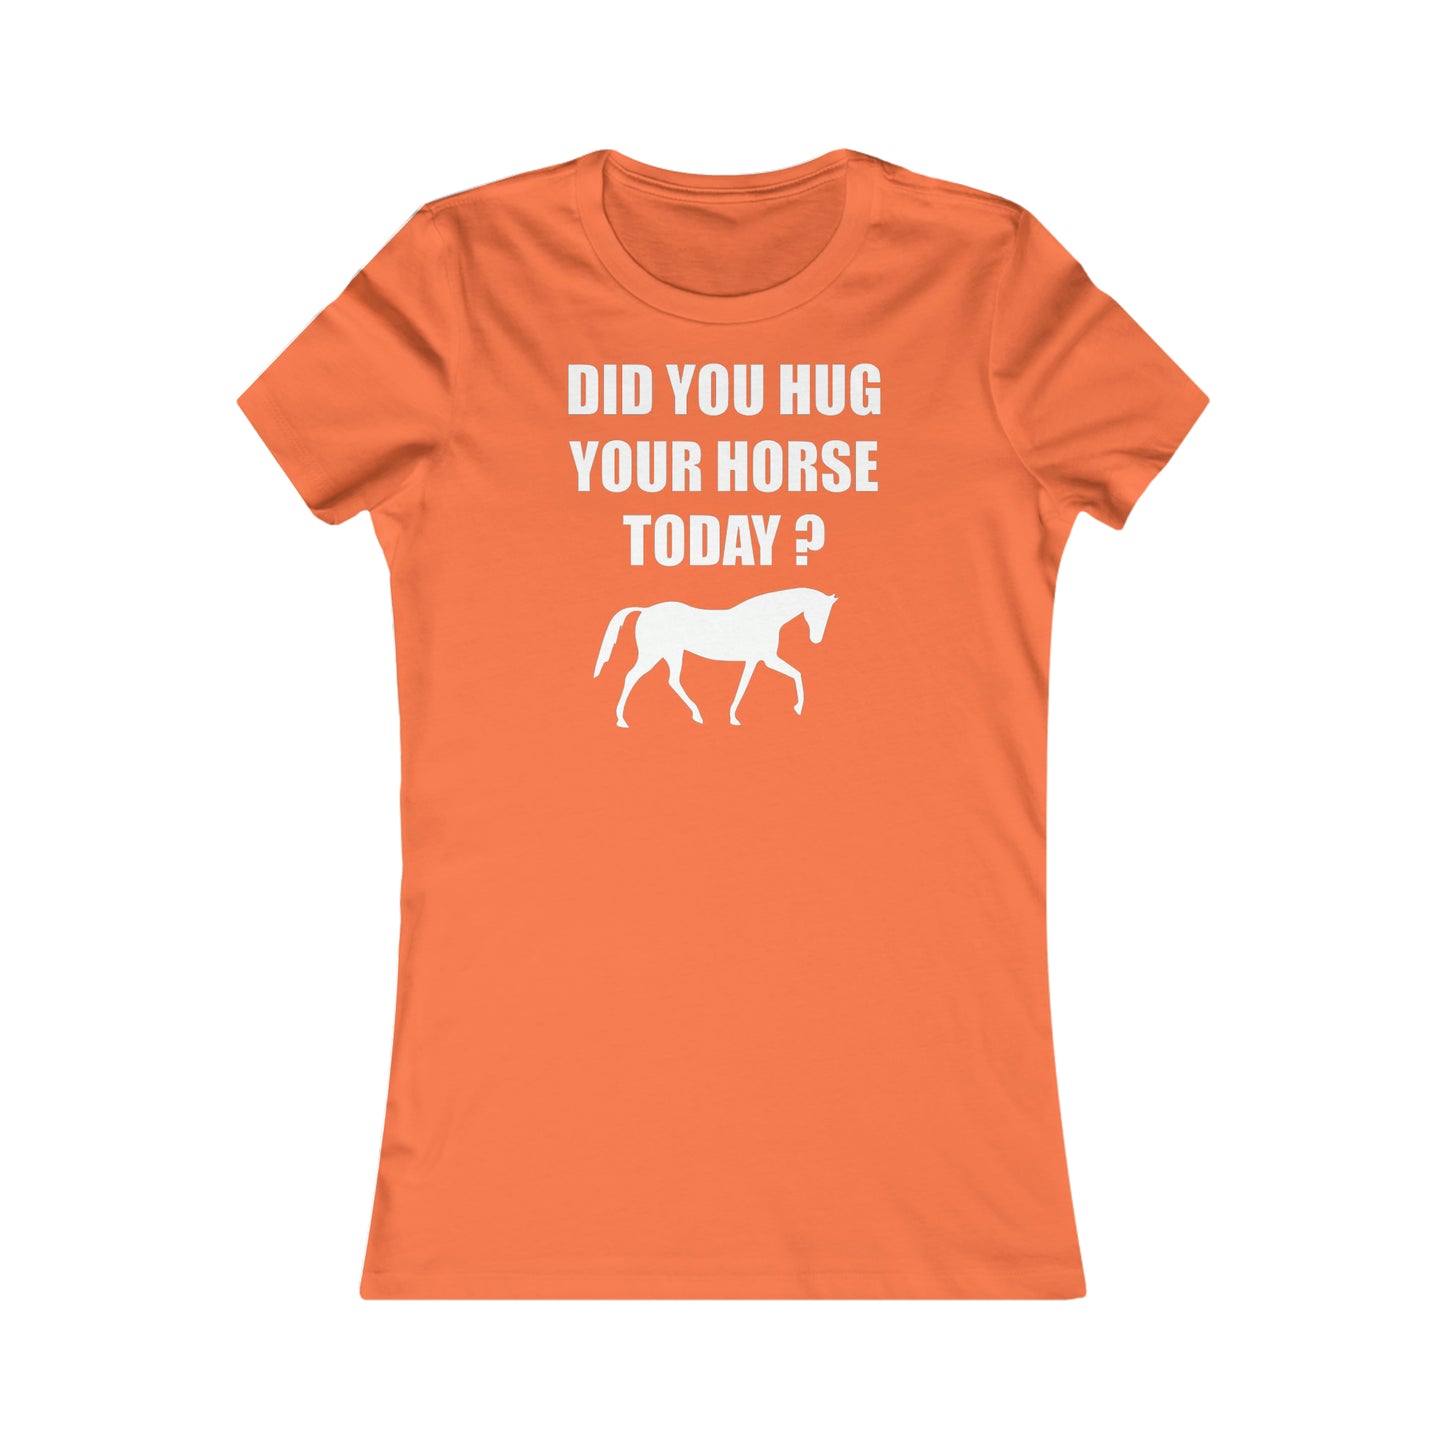 Horse Hugs - Women's Favorite Tee - White Print